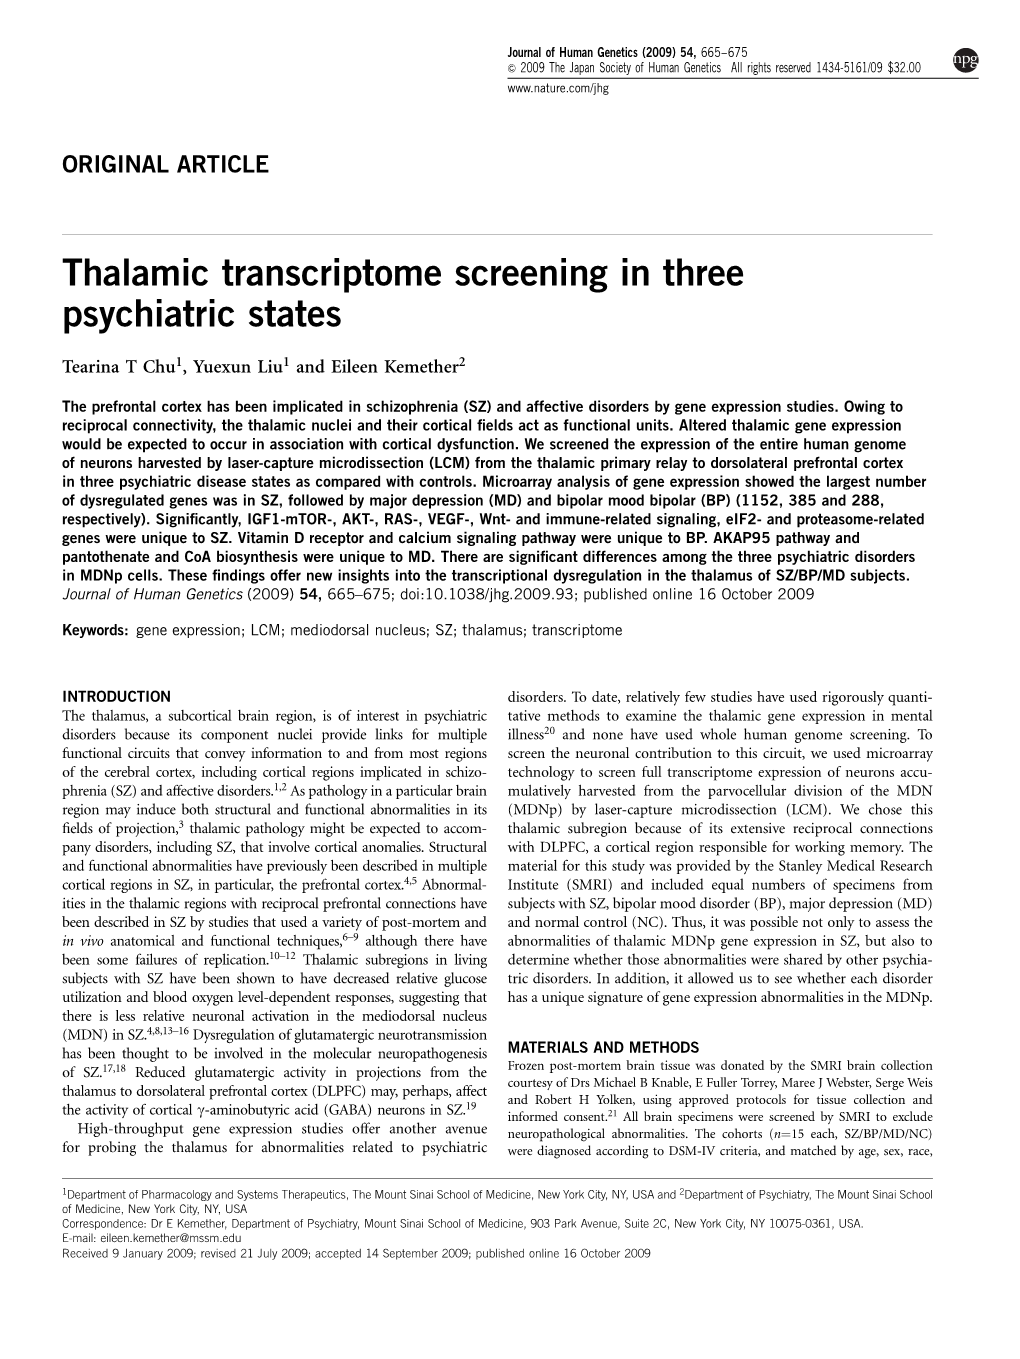 Thalamic Transcriptome Screening in Three Psychiatric States